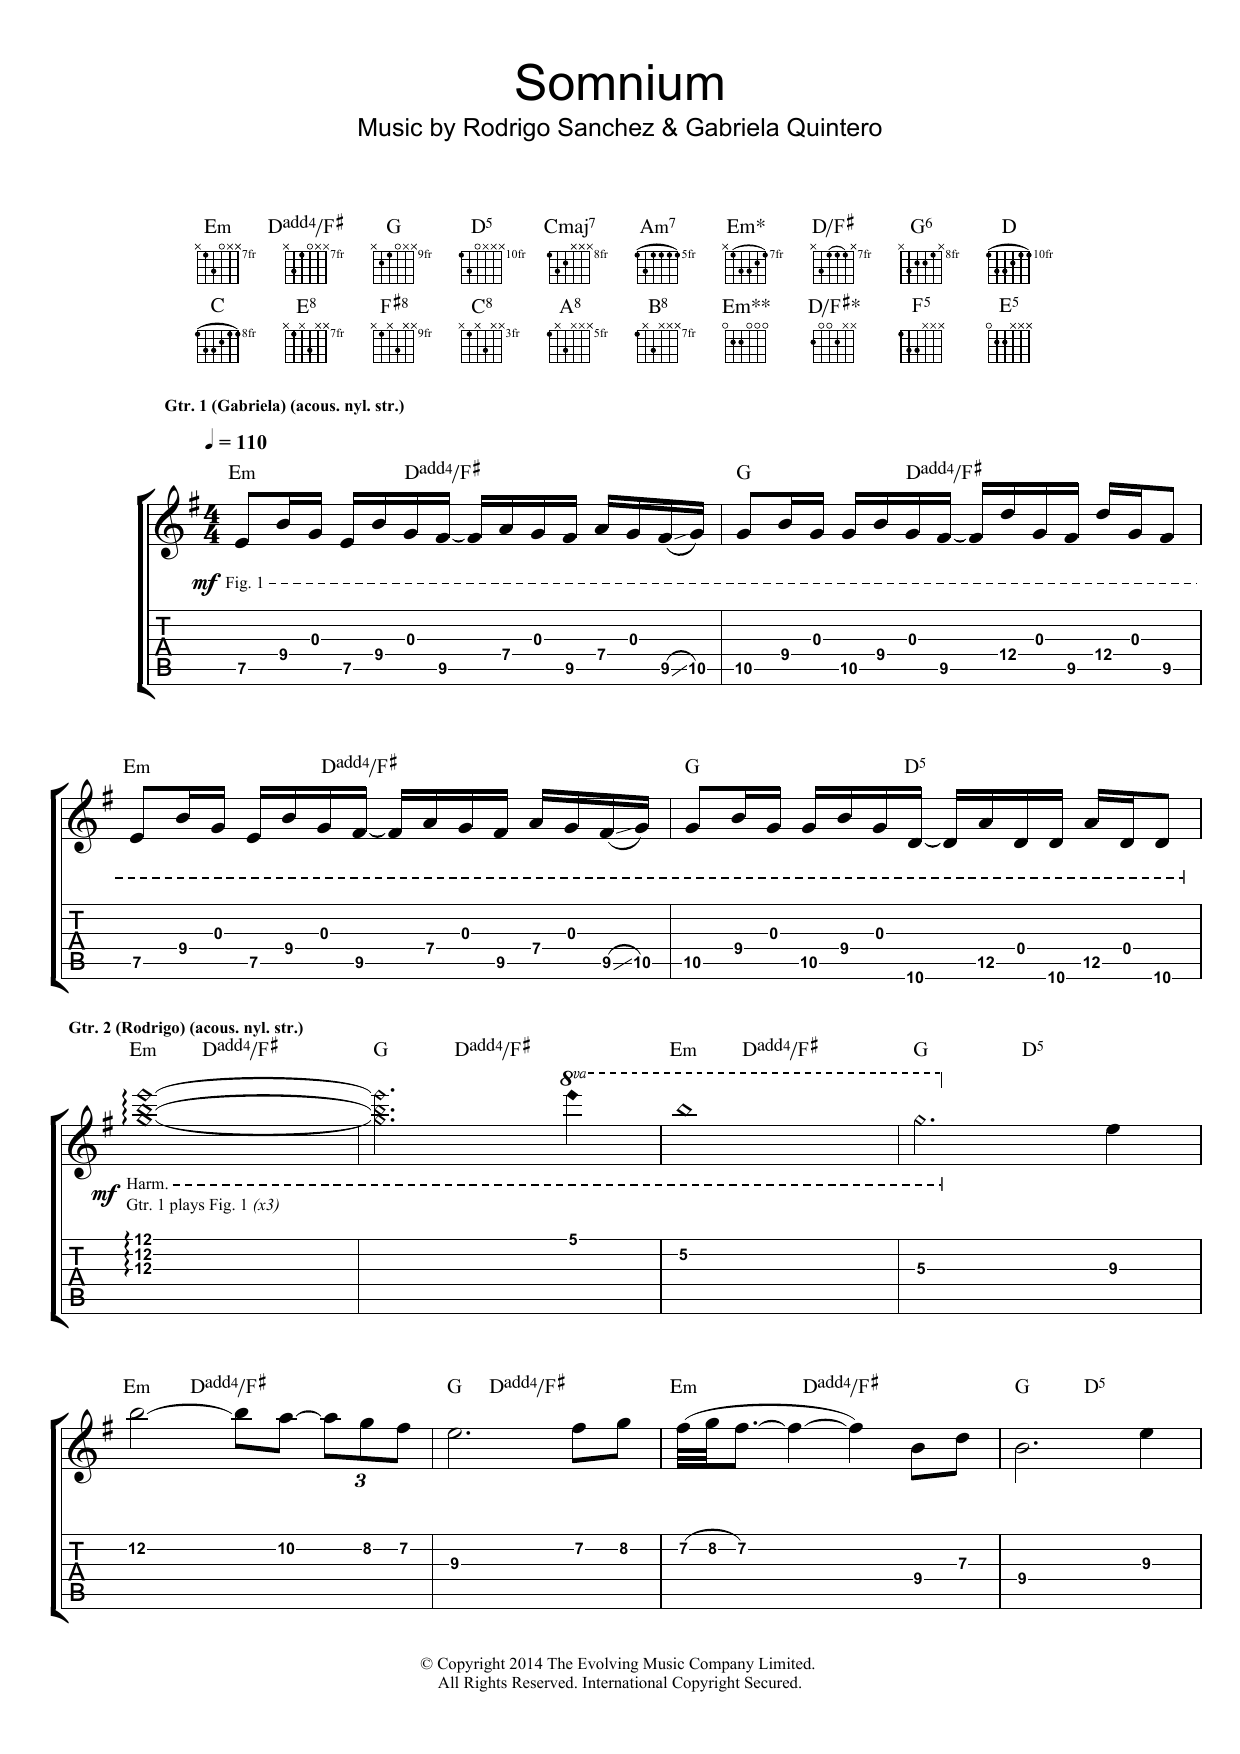 Rodrigo y Gabriela Somnium Sheet Music Notes & Chords for Guitar Tab - Download or Print PDF